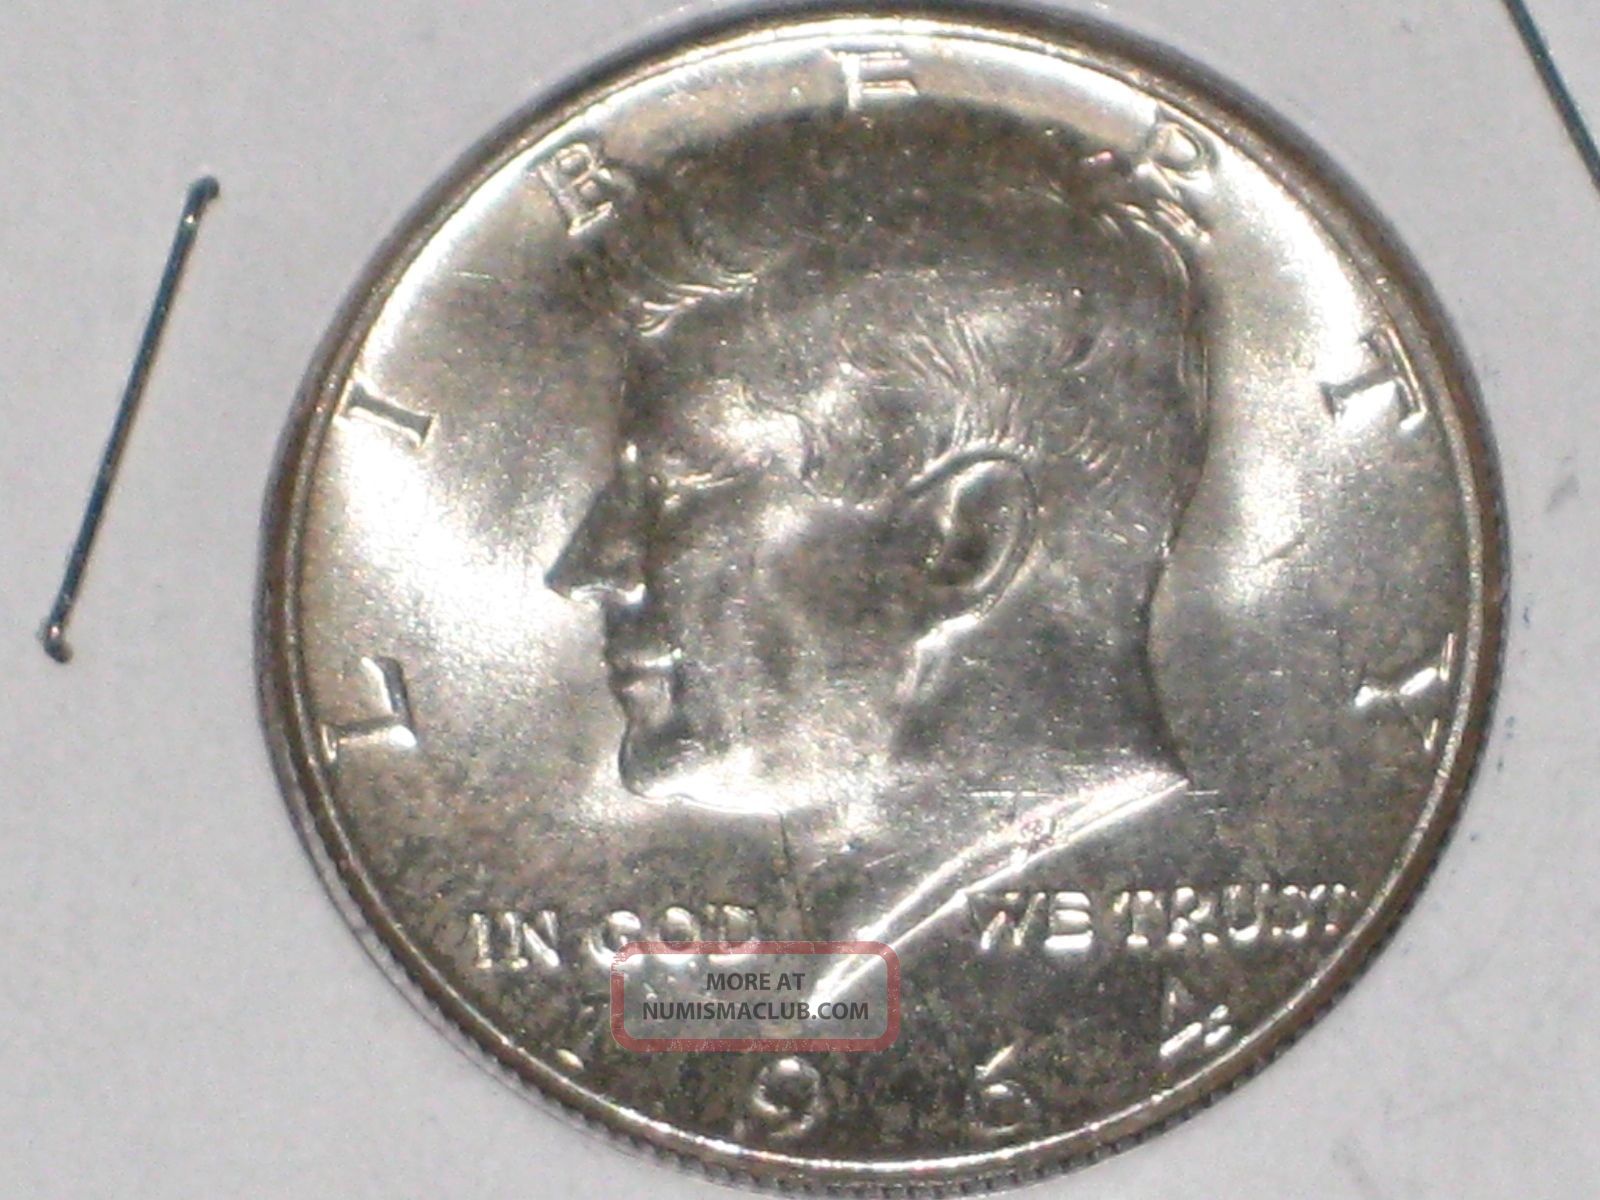 Two 2 Brilliant Uncirculated 1964 P Silver Kennedy Half Dollars